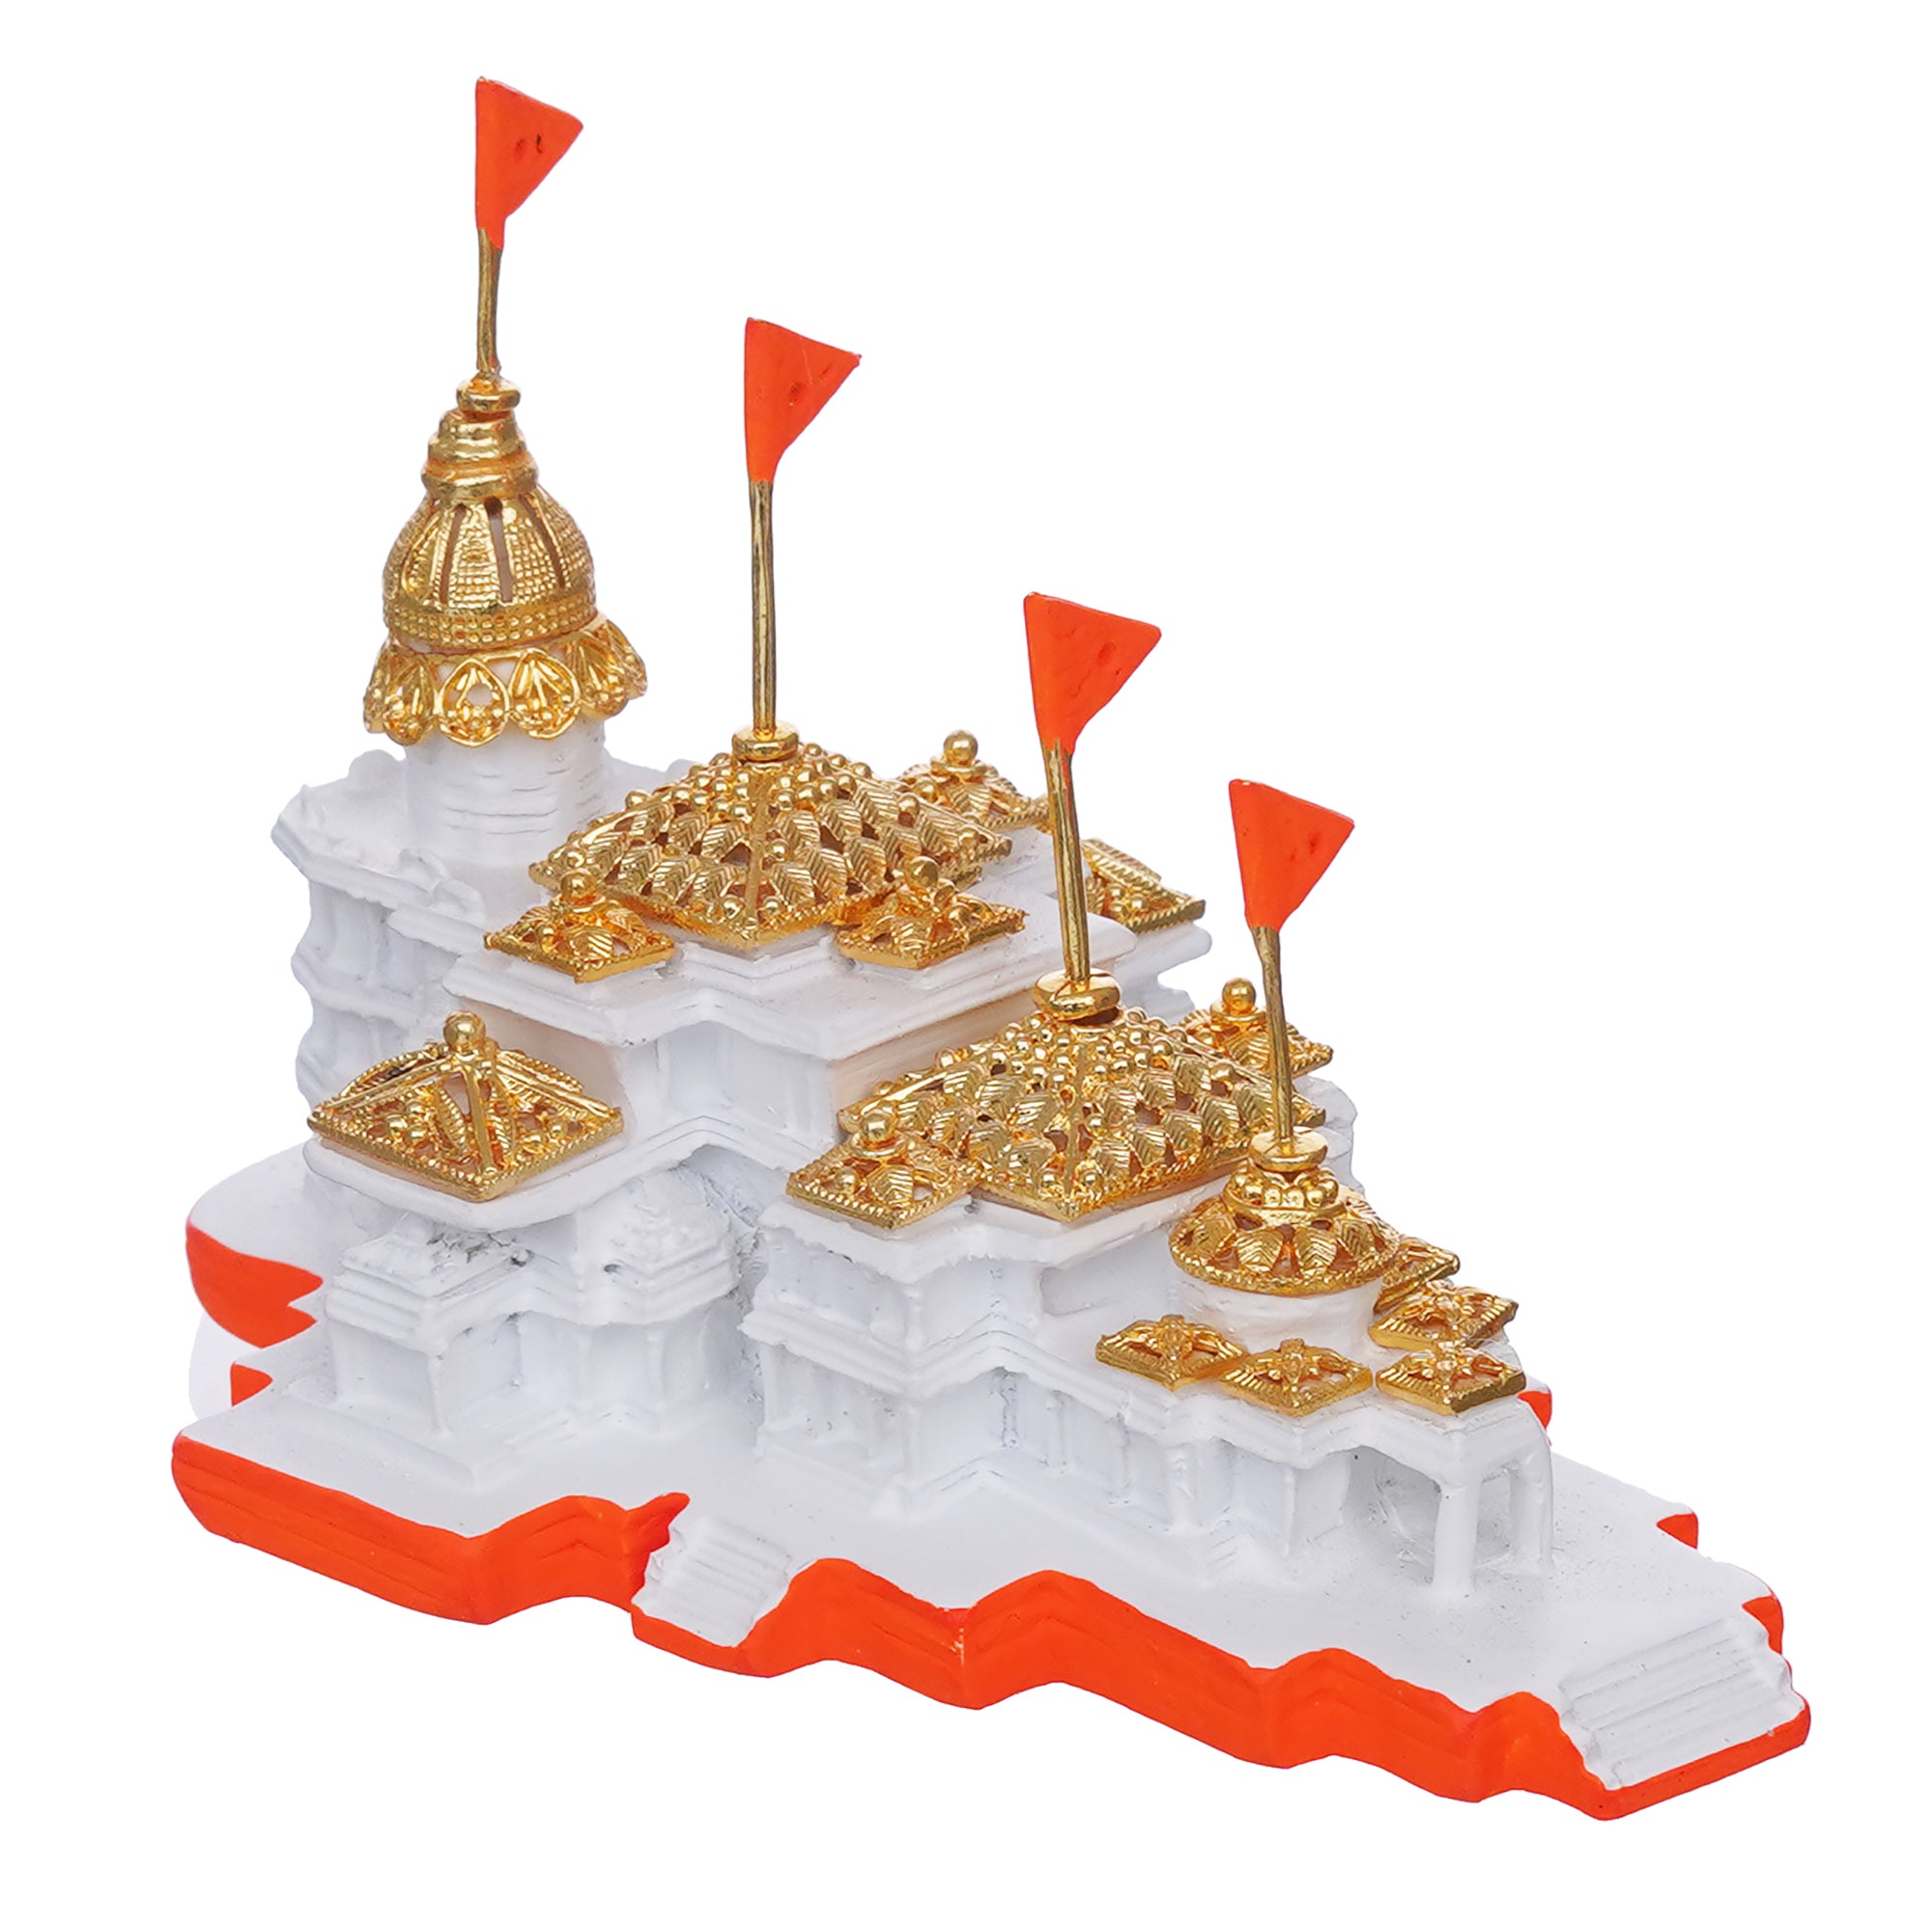 eCraftIndia Shri Ram Mandir Ayodhya Model Authentic Design - Perfect for Home Temple, Decor, and Spiritual Gifting (White, Gold, Orange) 2